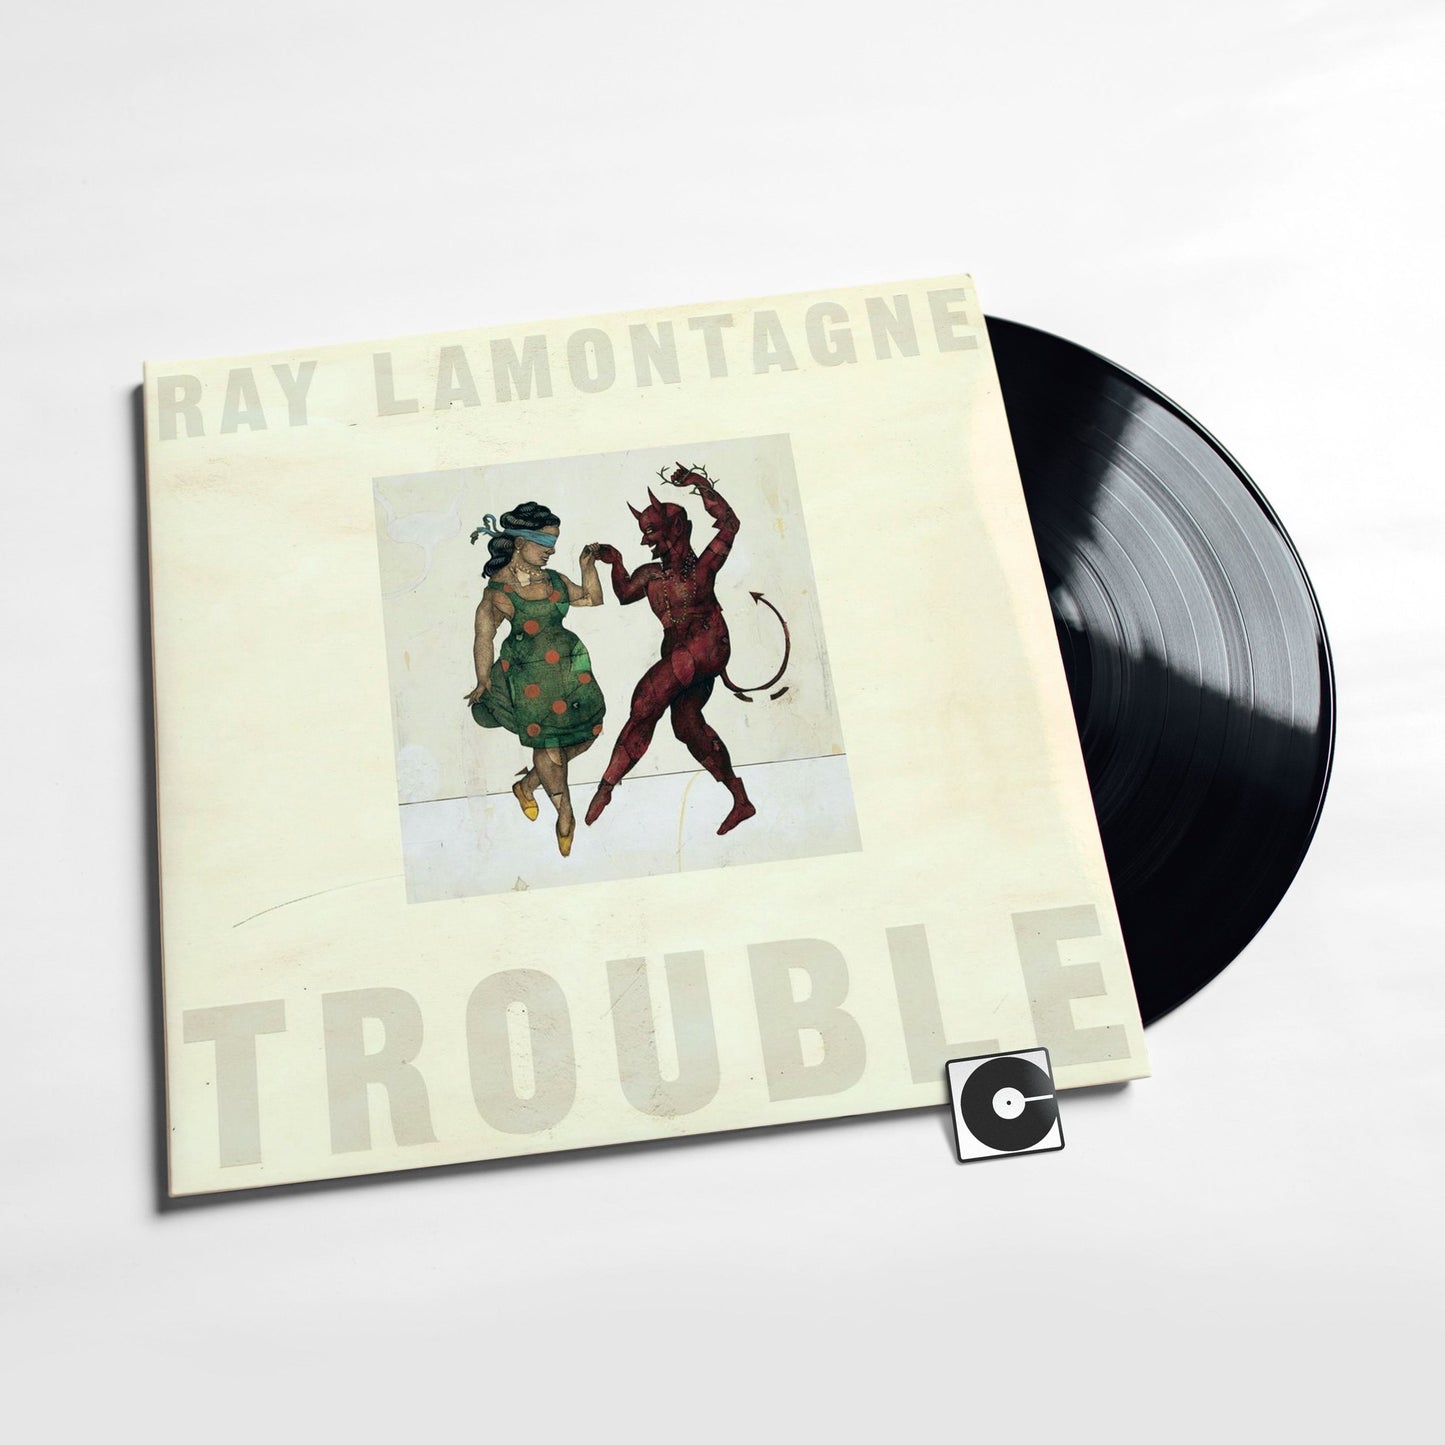 Ray LaMontagne - "Trouble"